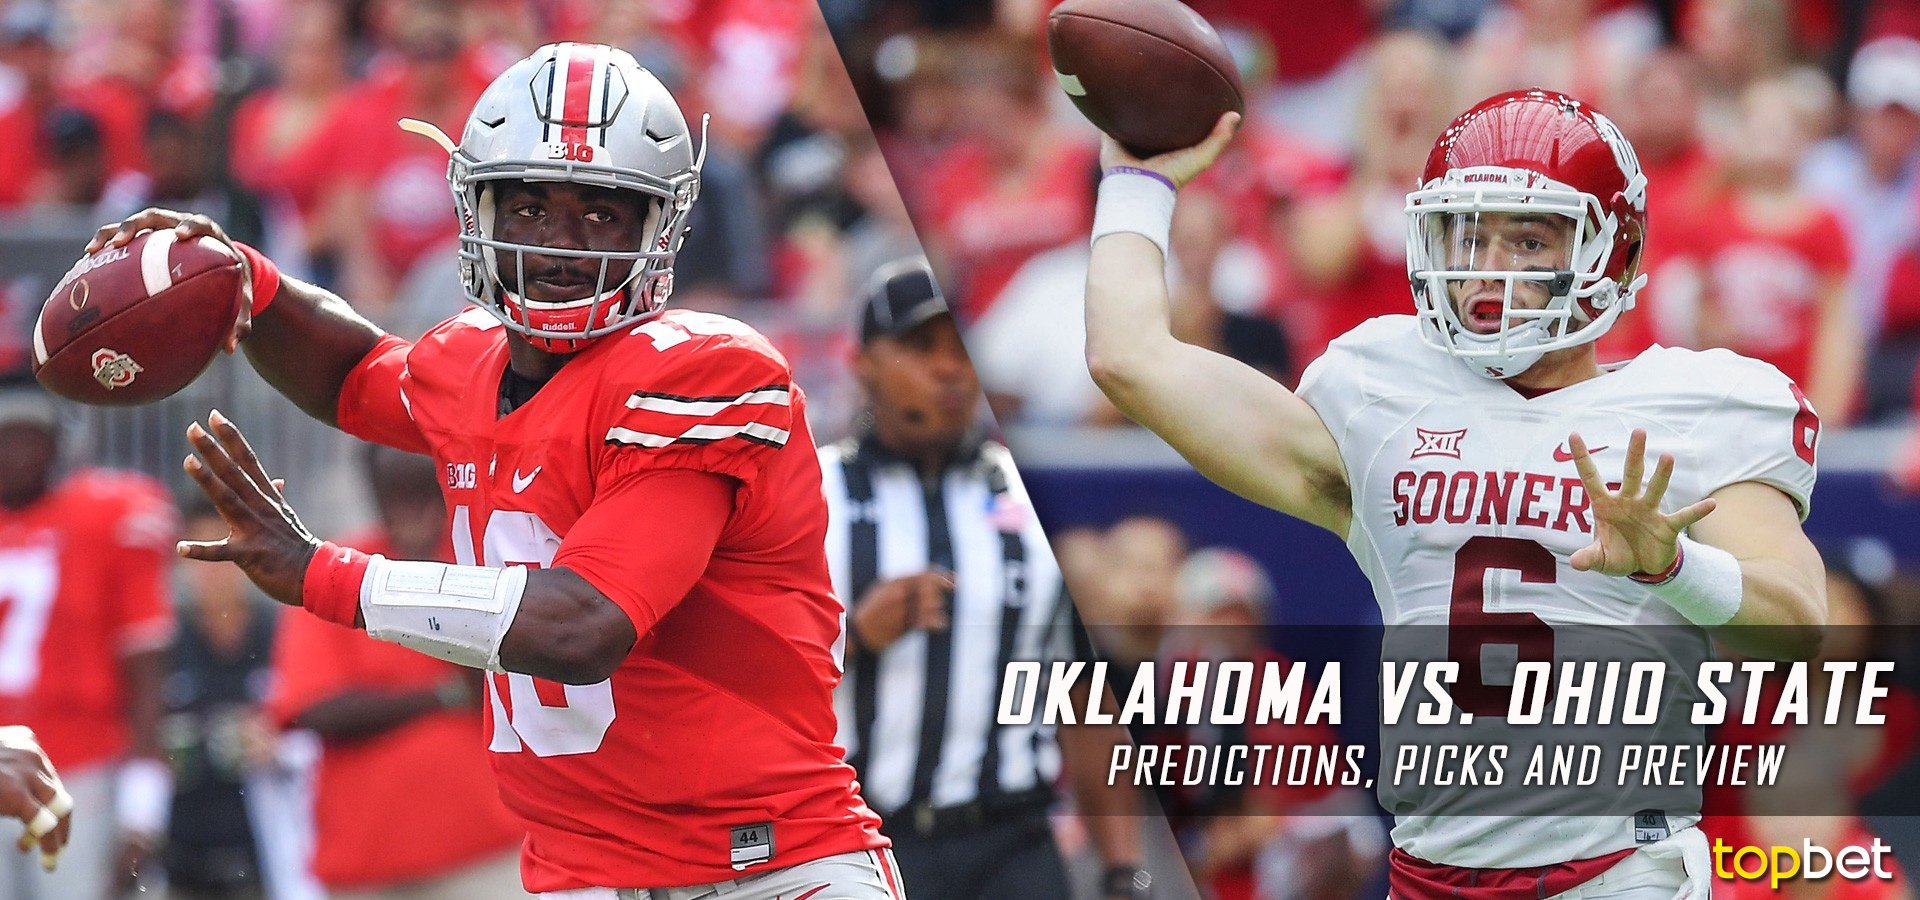 Oklahoma vs Ohio State Football Predictions, Picks and Preview